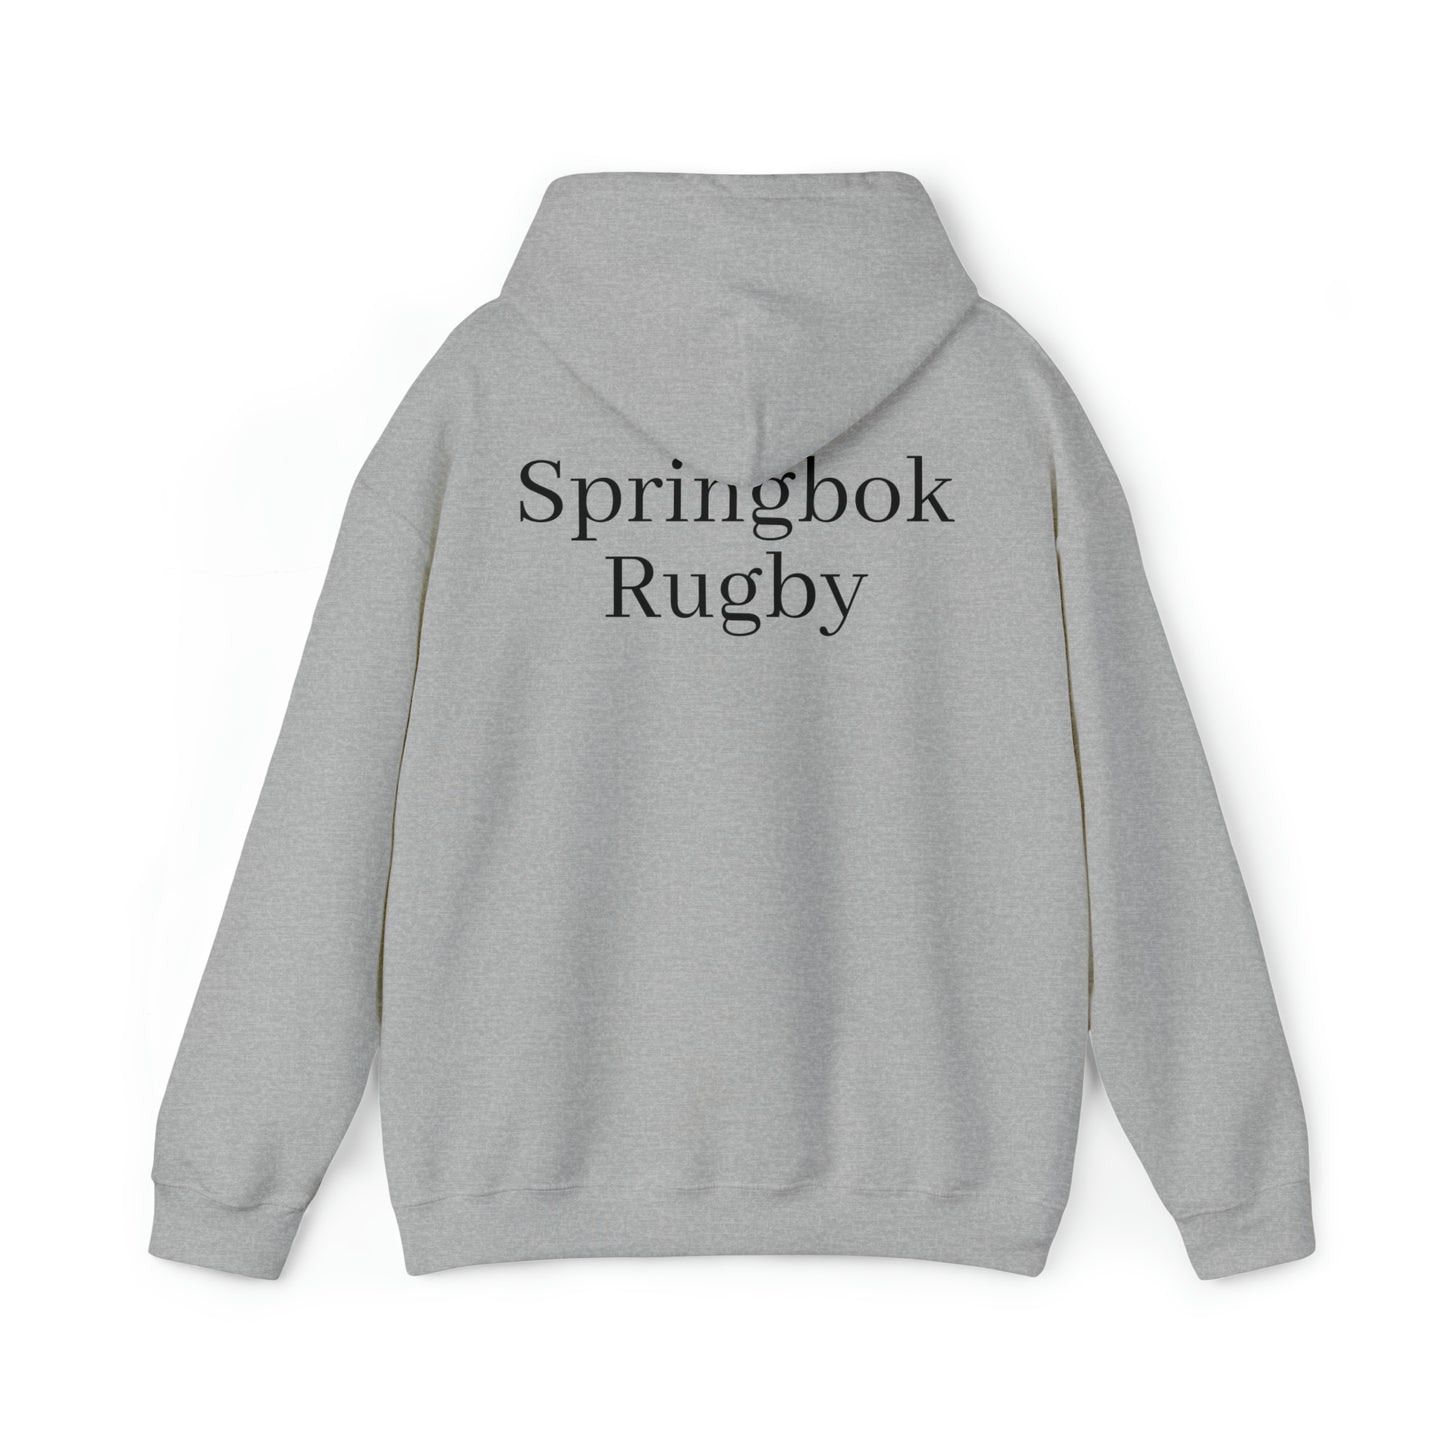 Springboks Celebrating - light hoodies